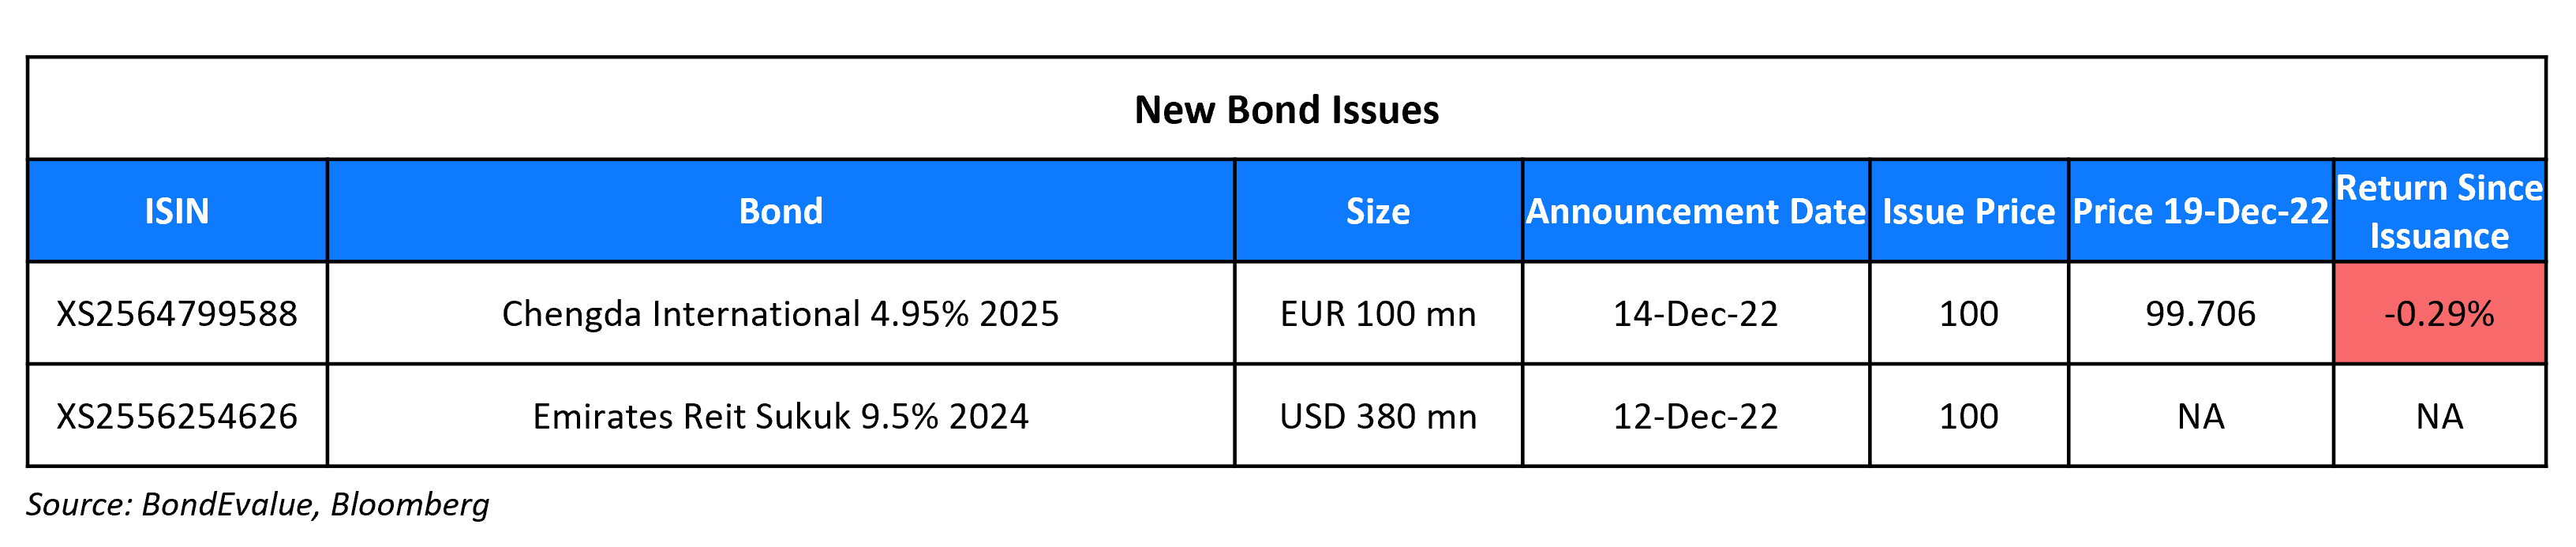 New Bond Issues 19 Dec 22